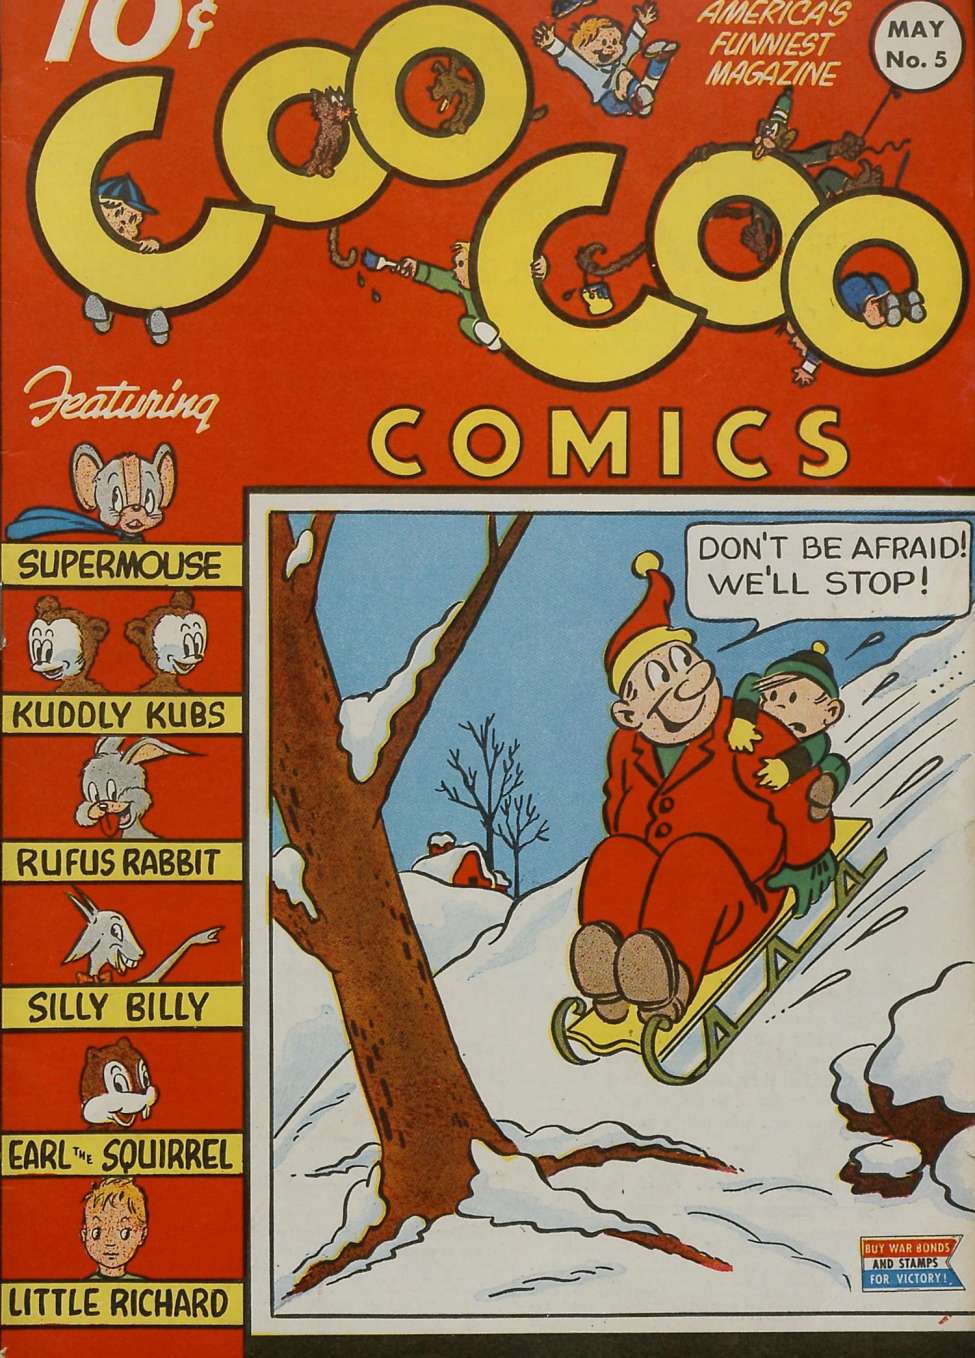 Comic Book Cover For Coo Coo Comics 5